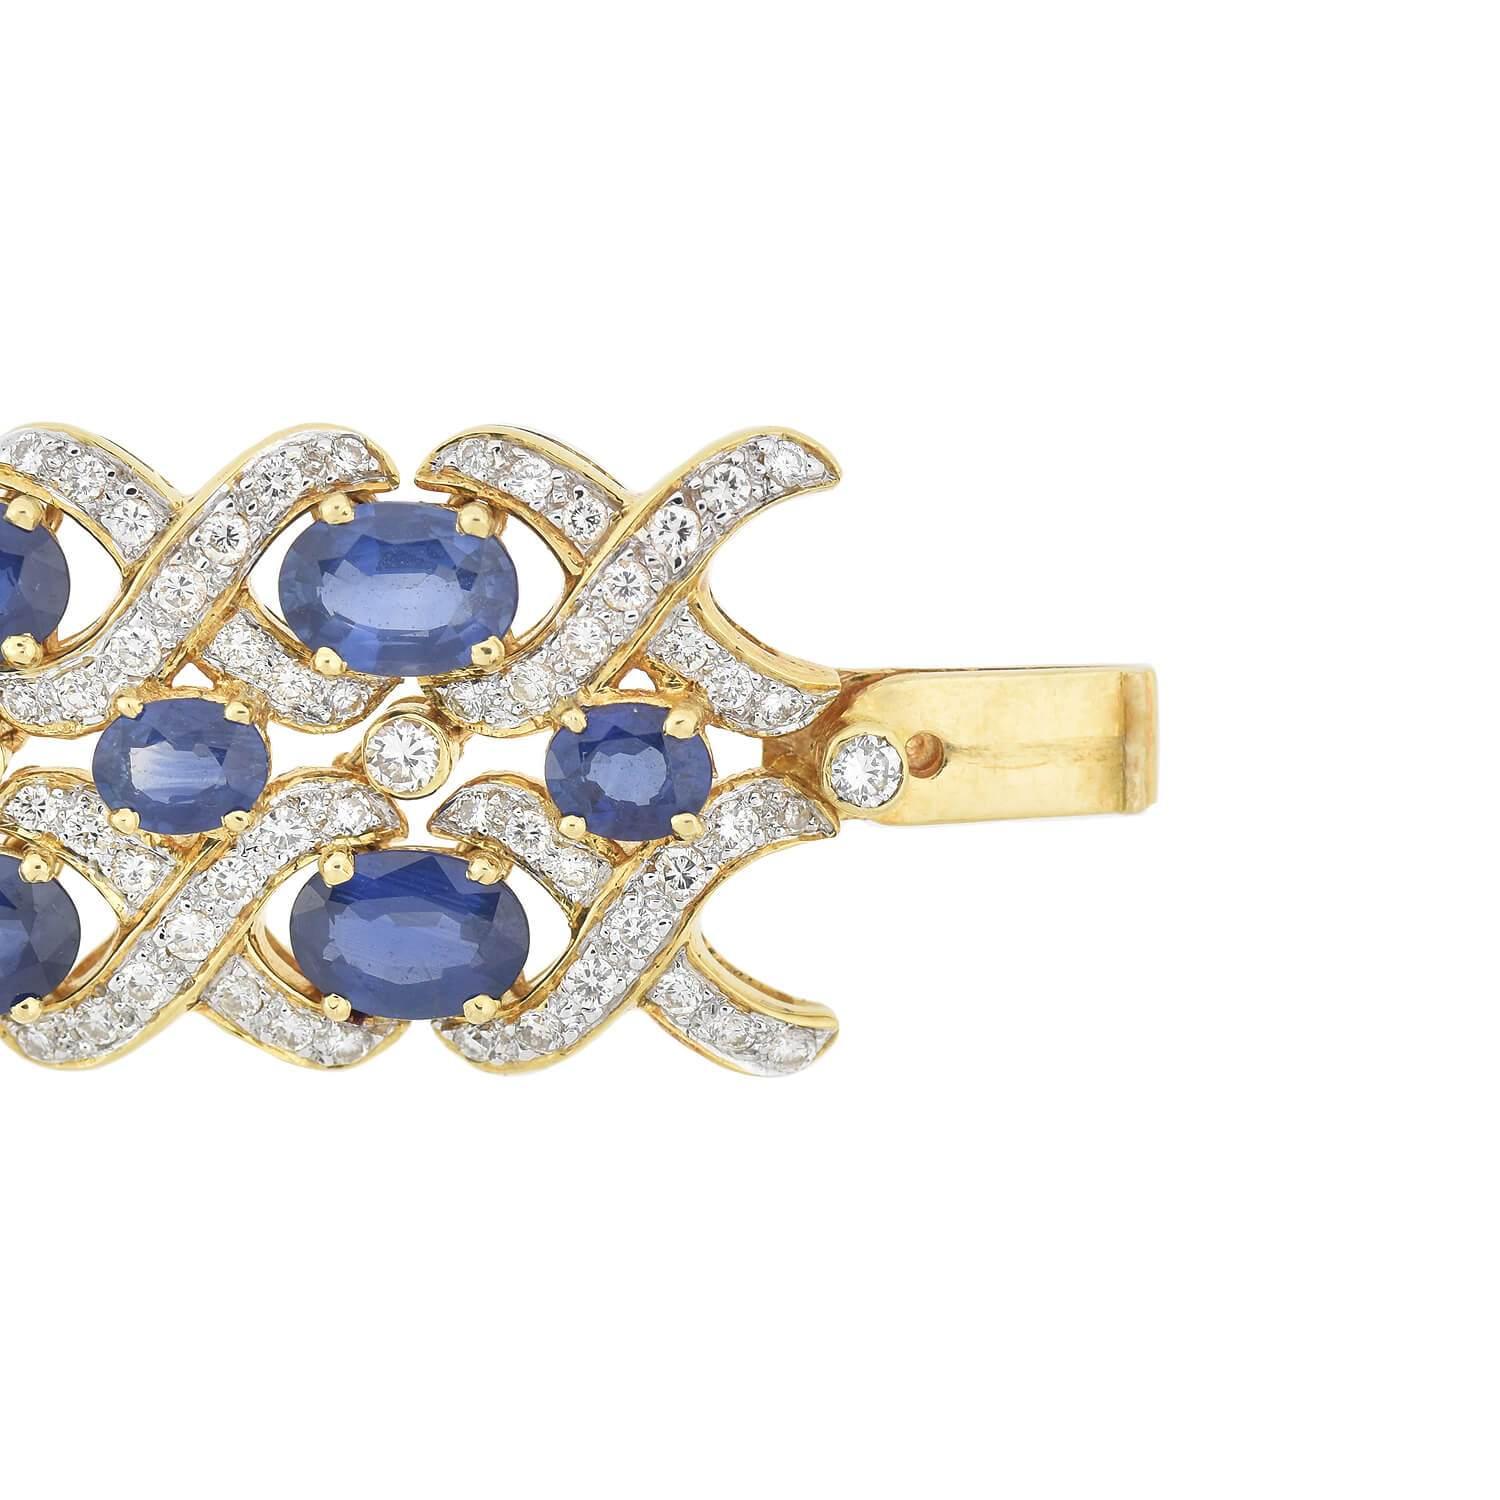 Women's 2.50 Carat Diamond and 32 Carat Sapphire Encrusted Link Bracelet